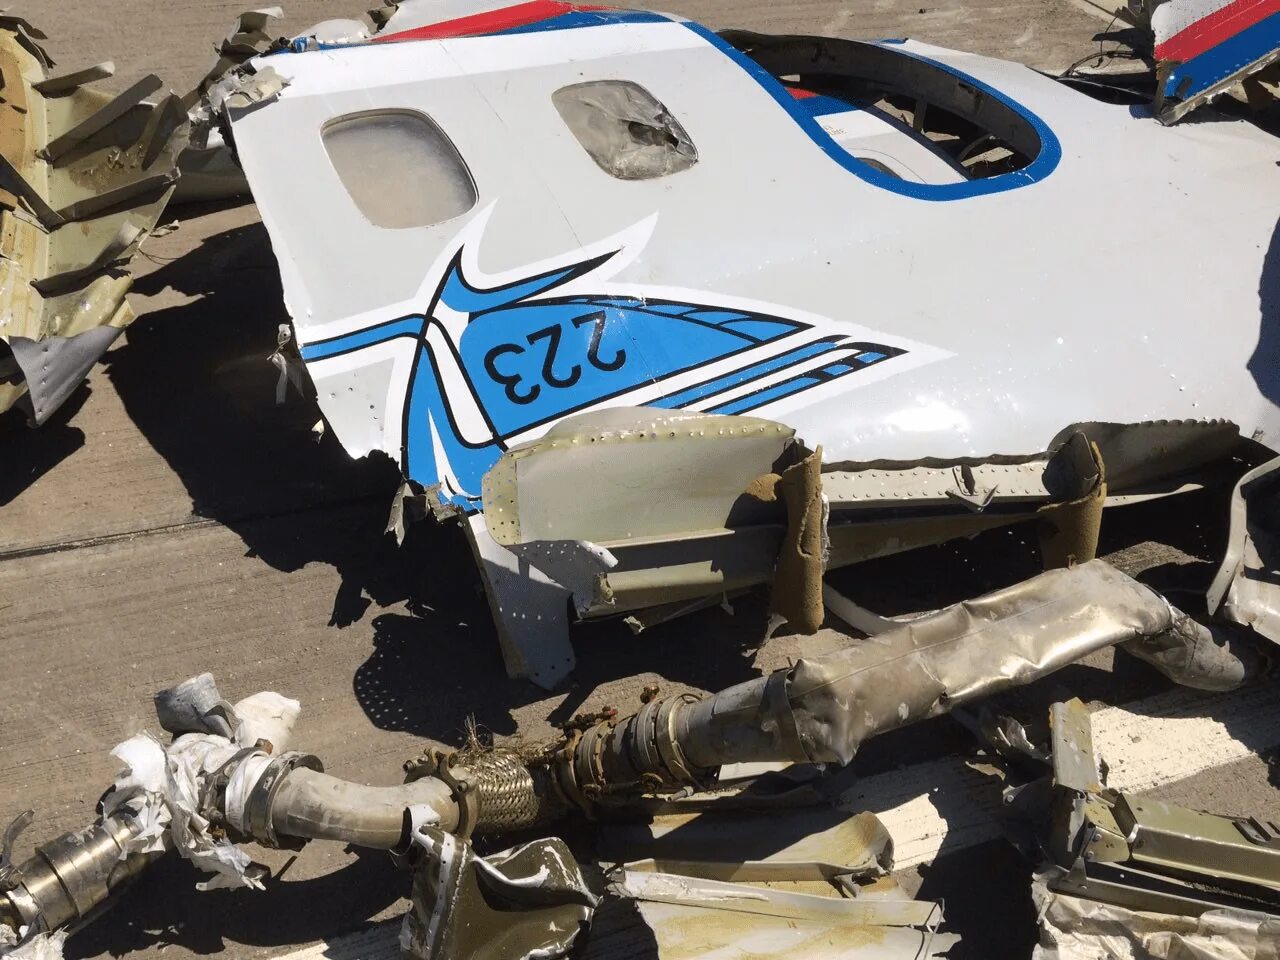 Победа сочи крушение. Ту-154 Сочи катастрофа. Обломки ту 154 Сочи. Катастрофа в Сочи авиа ту 154. Катастрофа ту-154 под Сочи 25 декабря 2016 года.